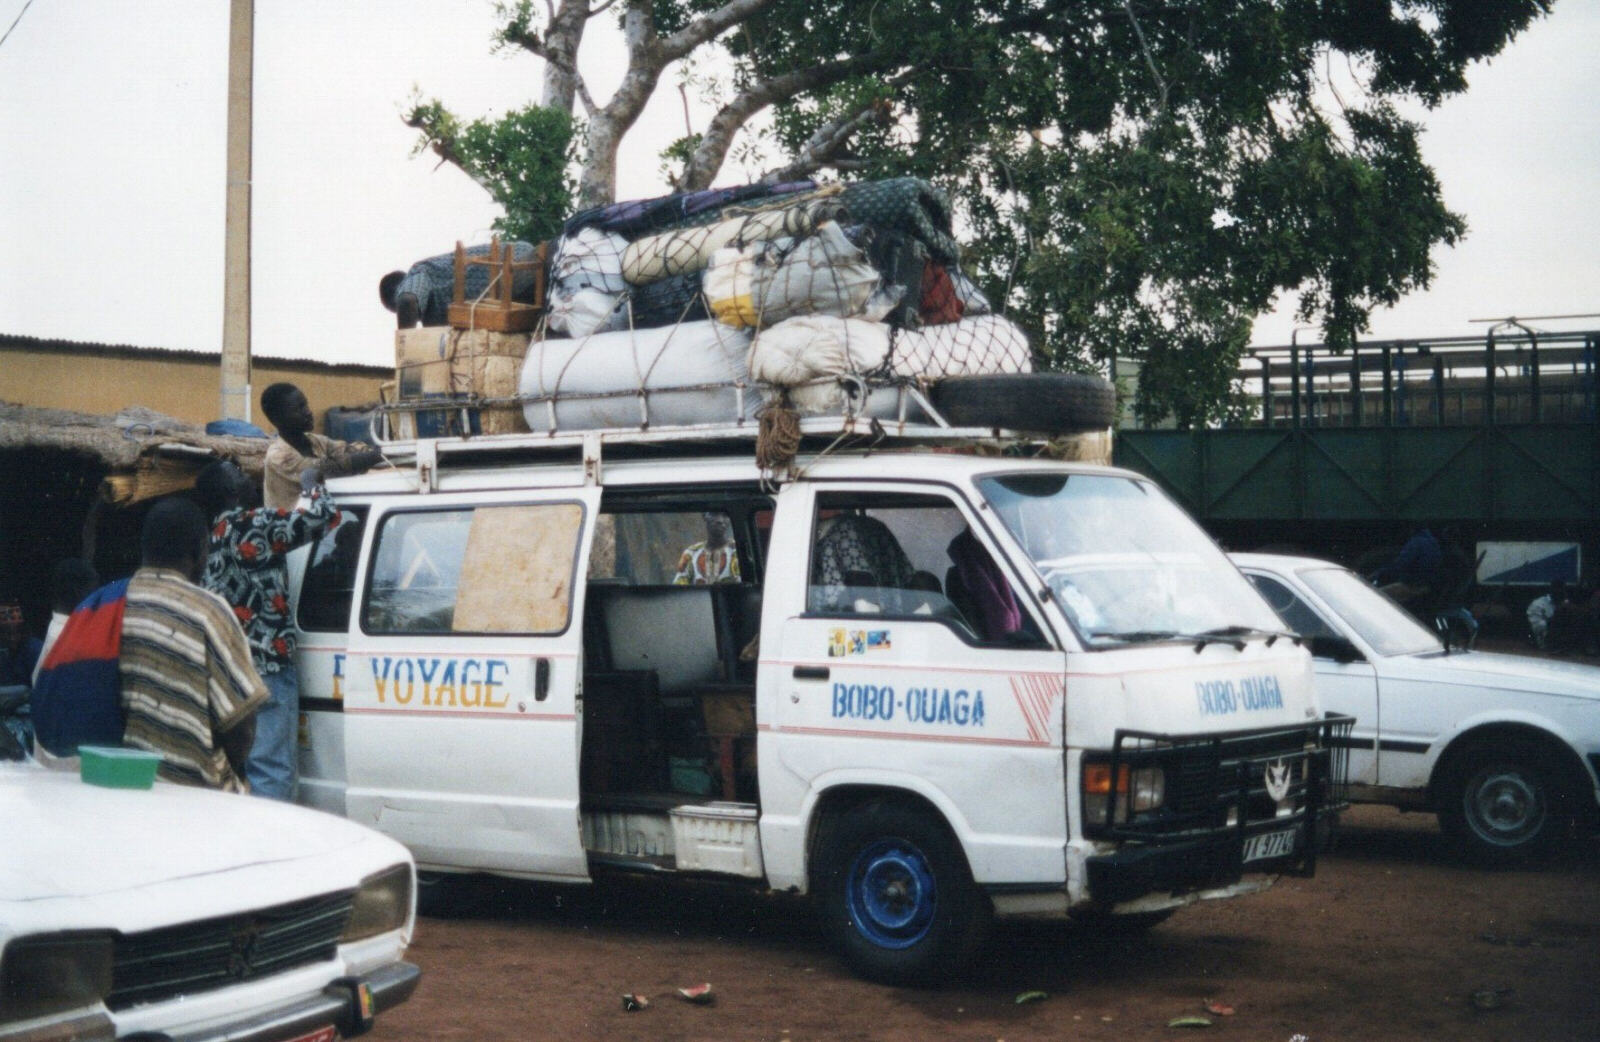 The minibus from Mopti to Bobo-Dioulasso in Birkins Faso